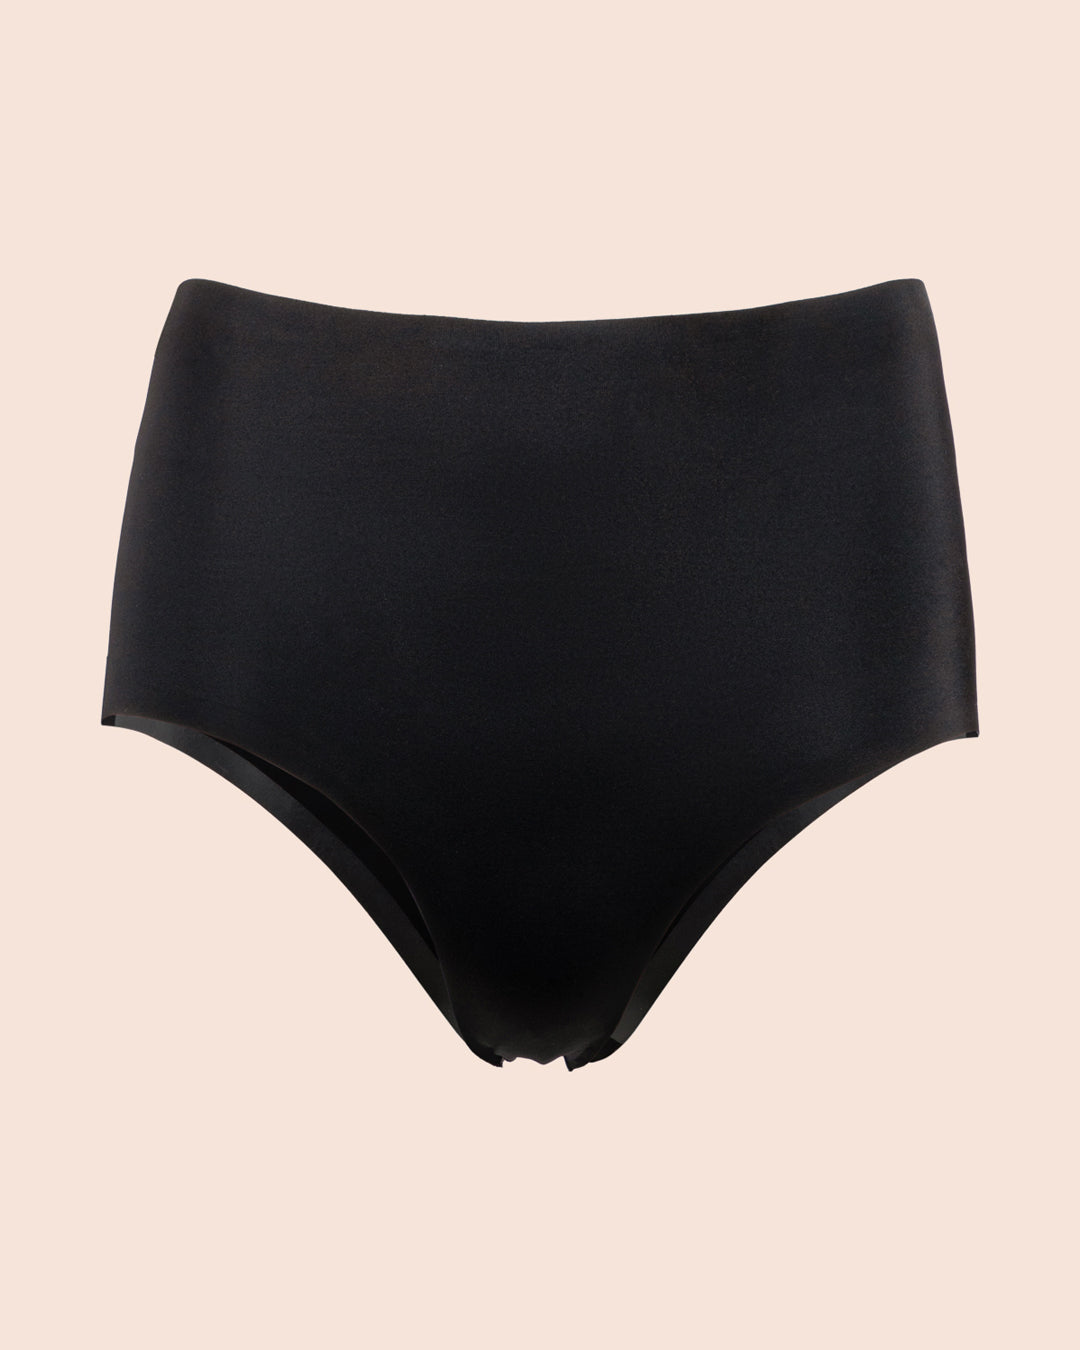 Longshore Full Coverage Bikini Bottom | FINAL SALE